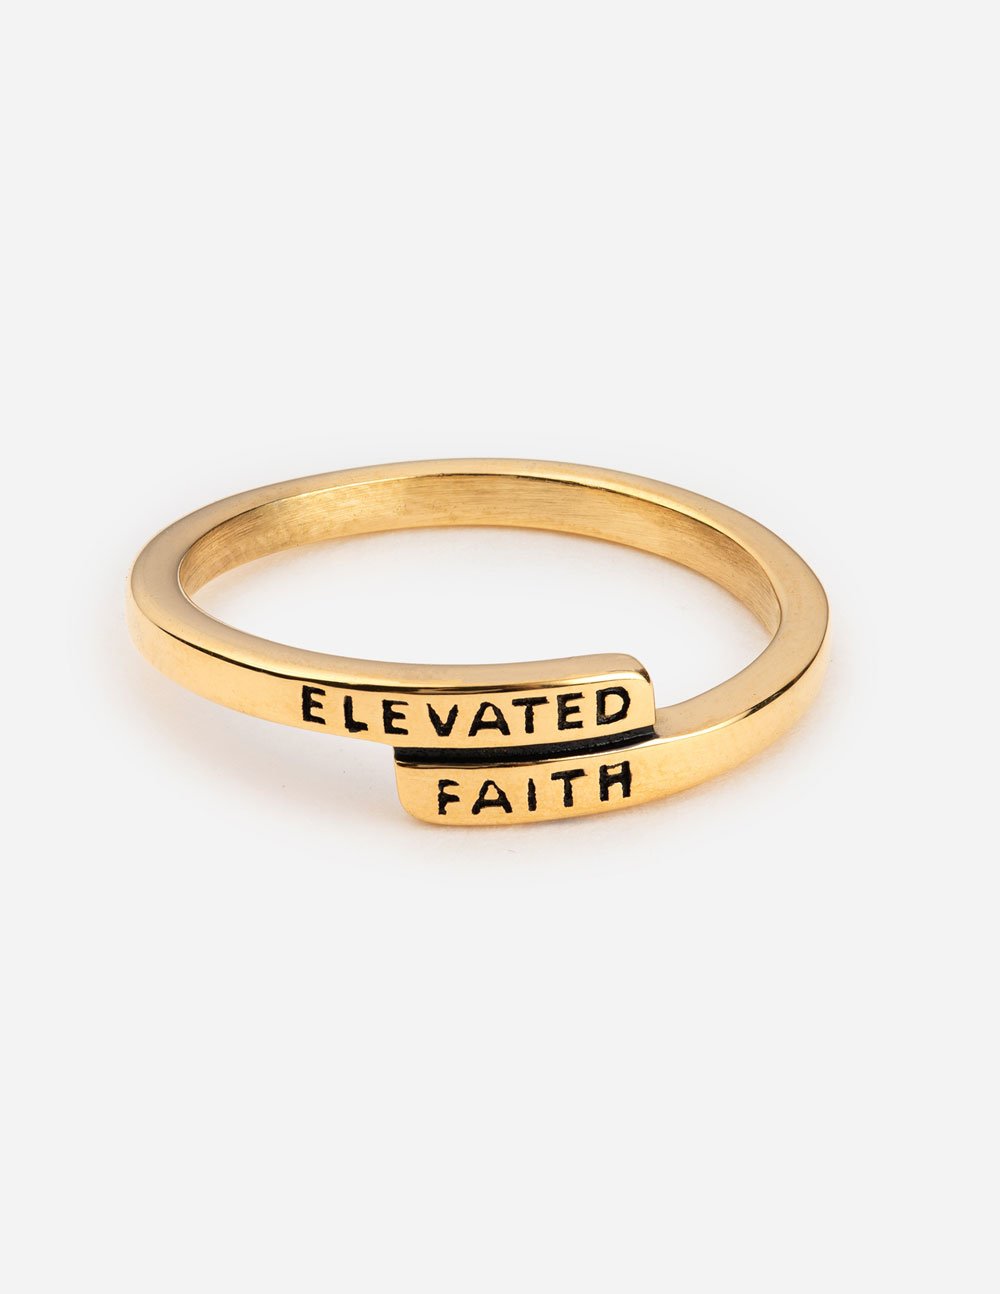 Trust God Letter Bracelet | Christian Jewelry | Elevated Faith